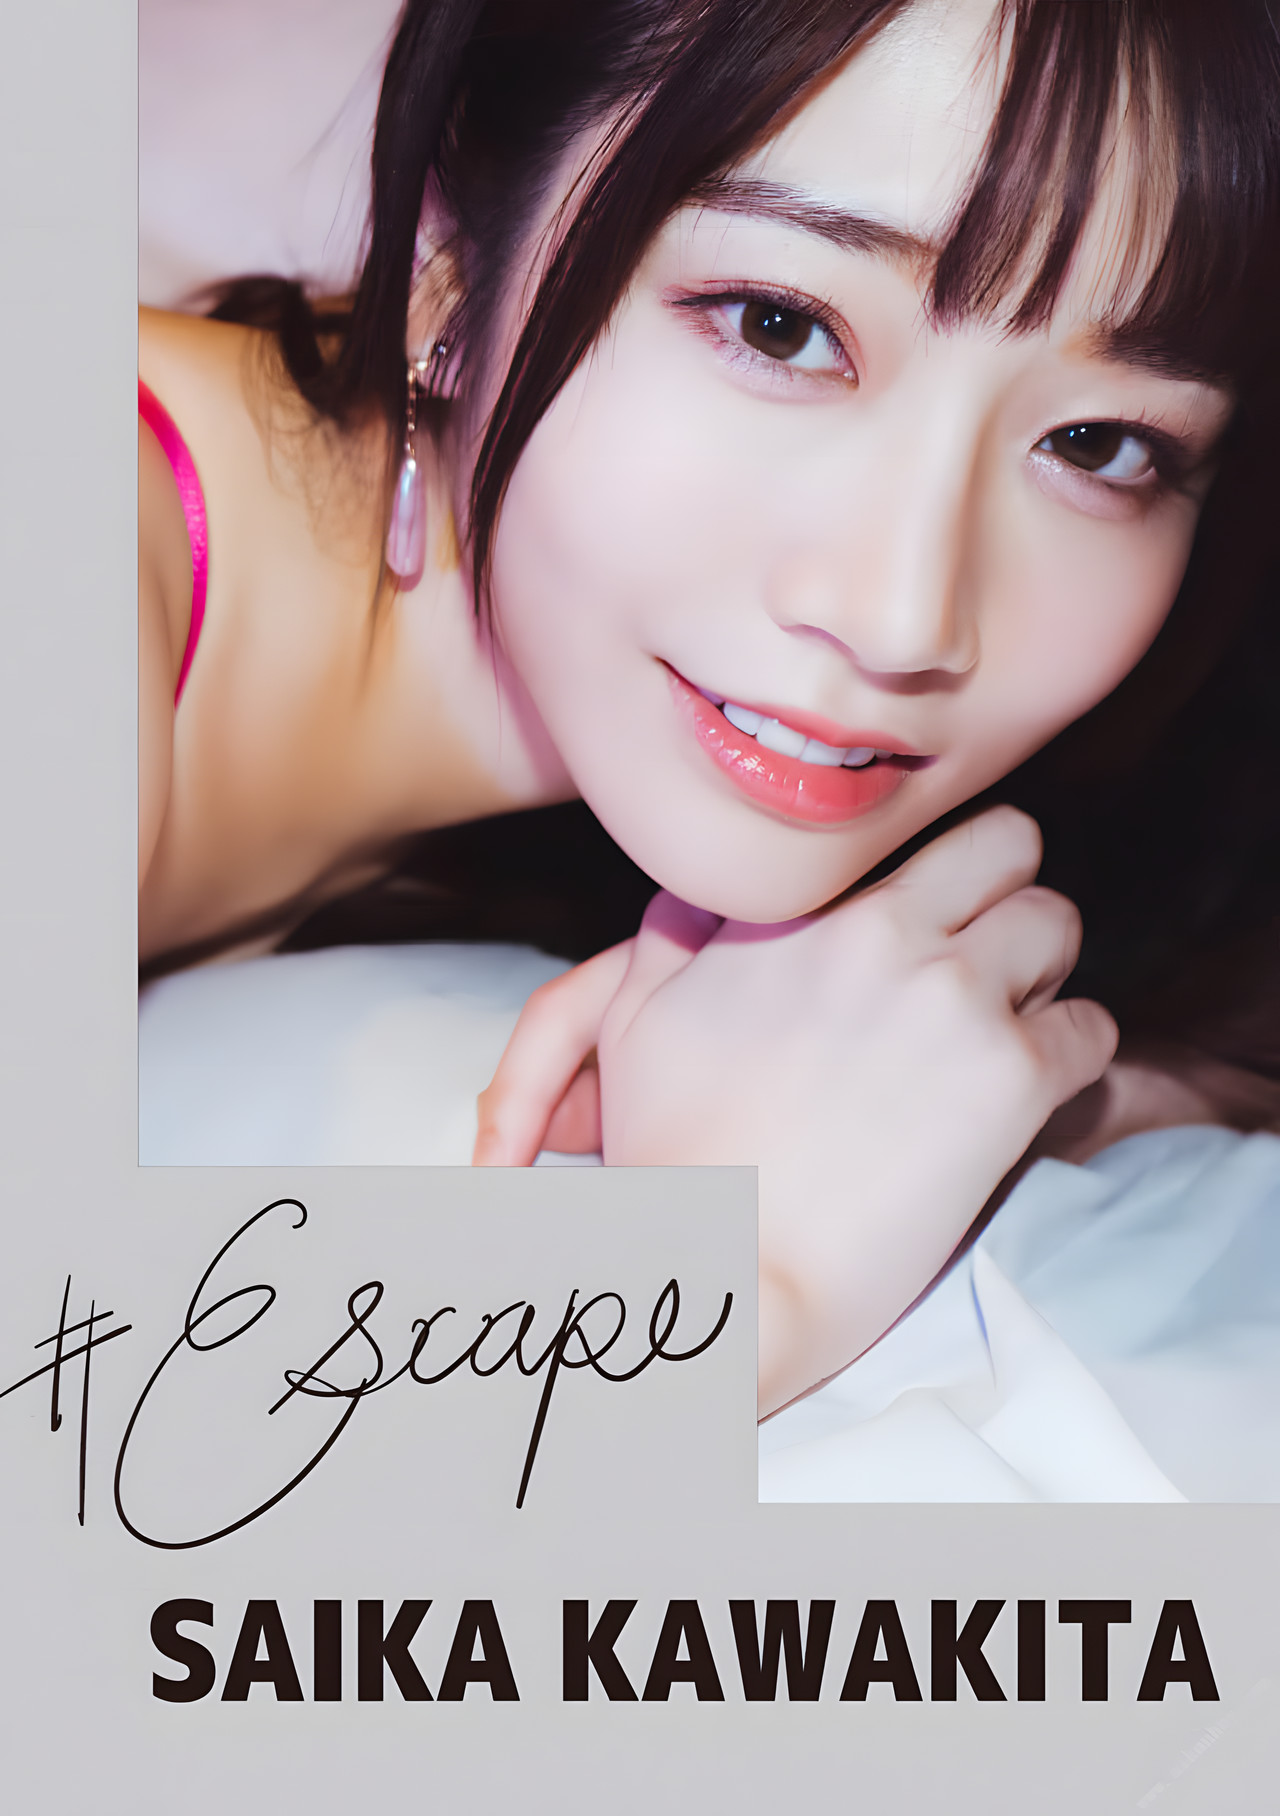 Saika Kawakita 河北彩花, #Escape デジタル写真集 Set.01